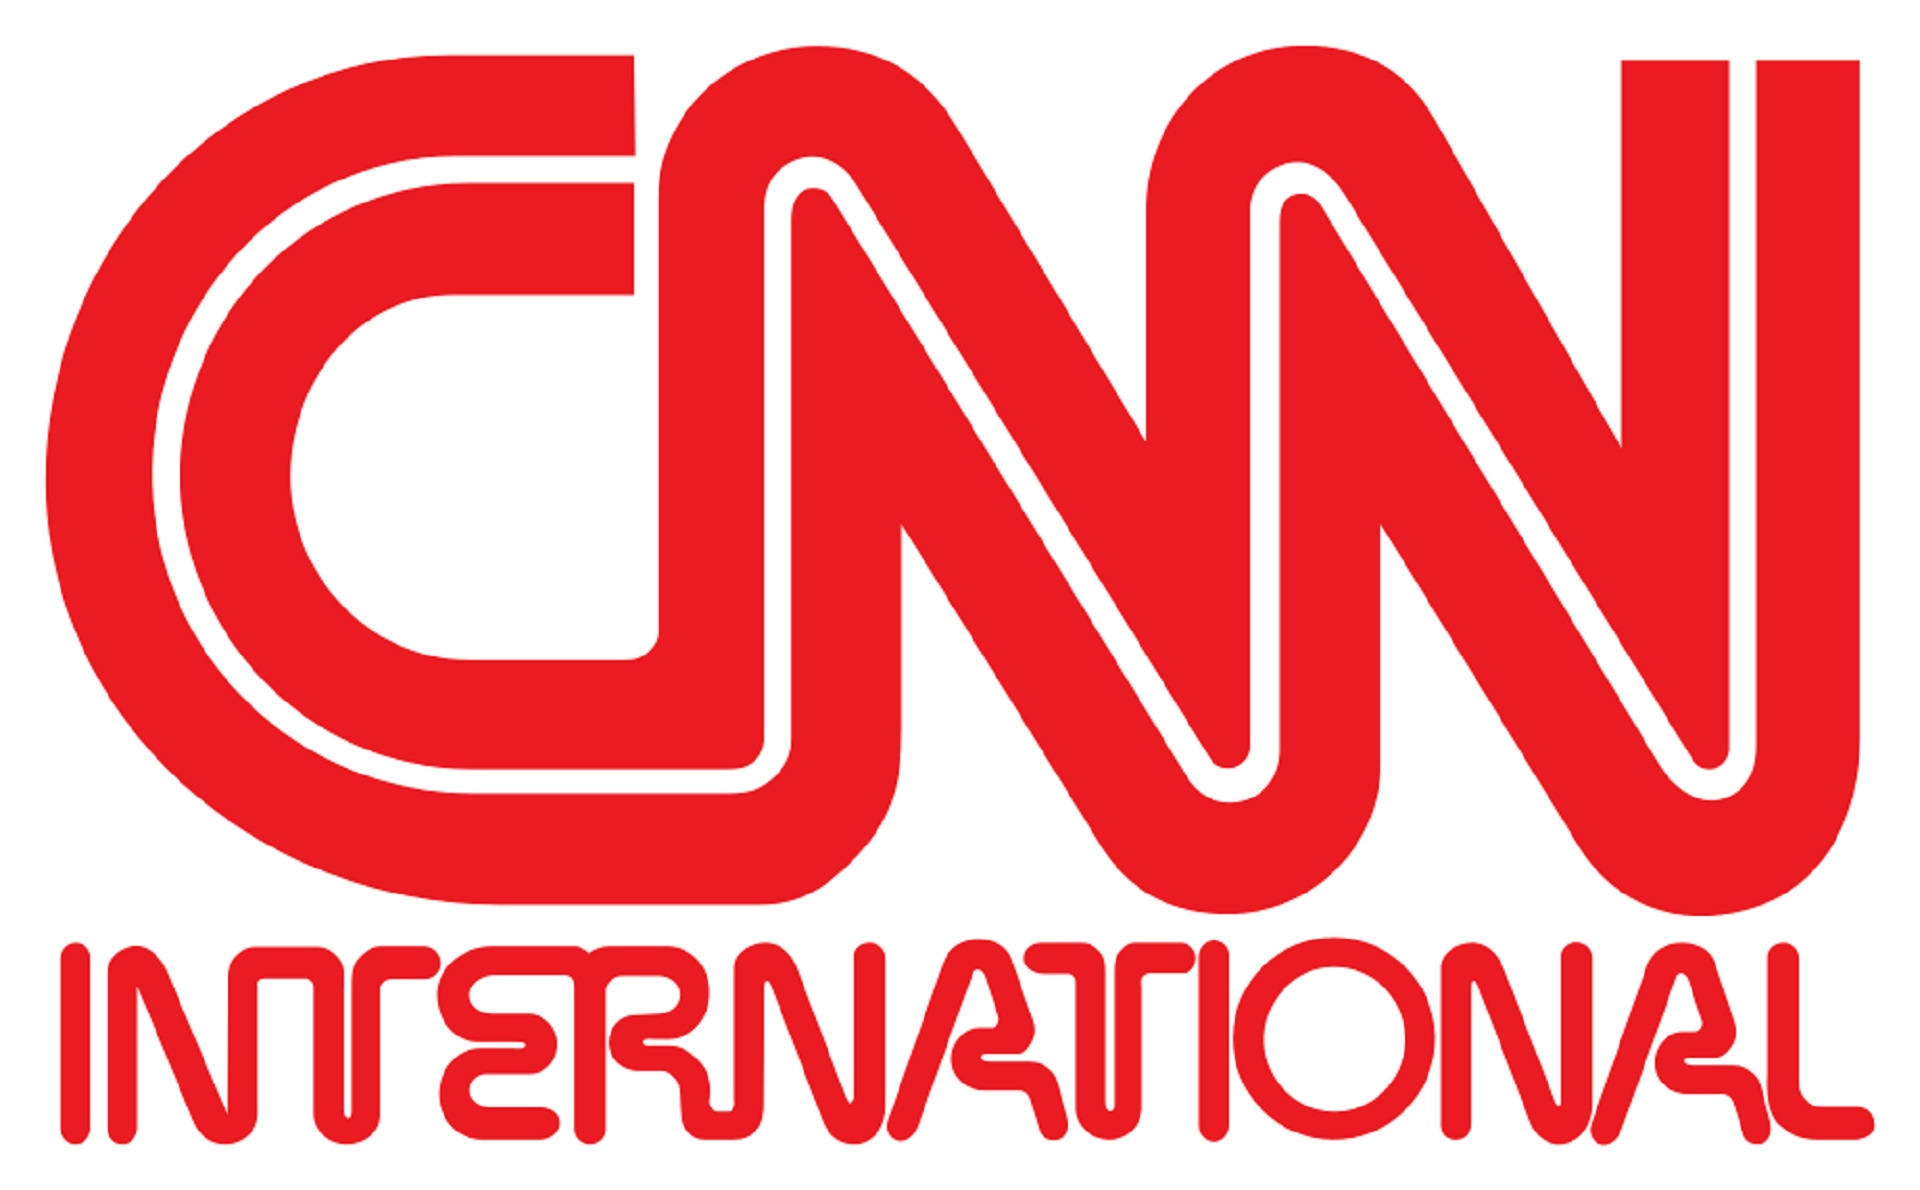 CNN International Logo Wallpaper